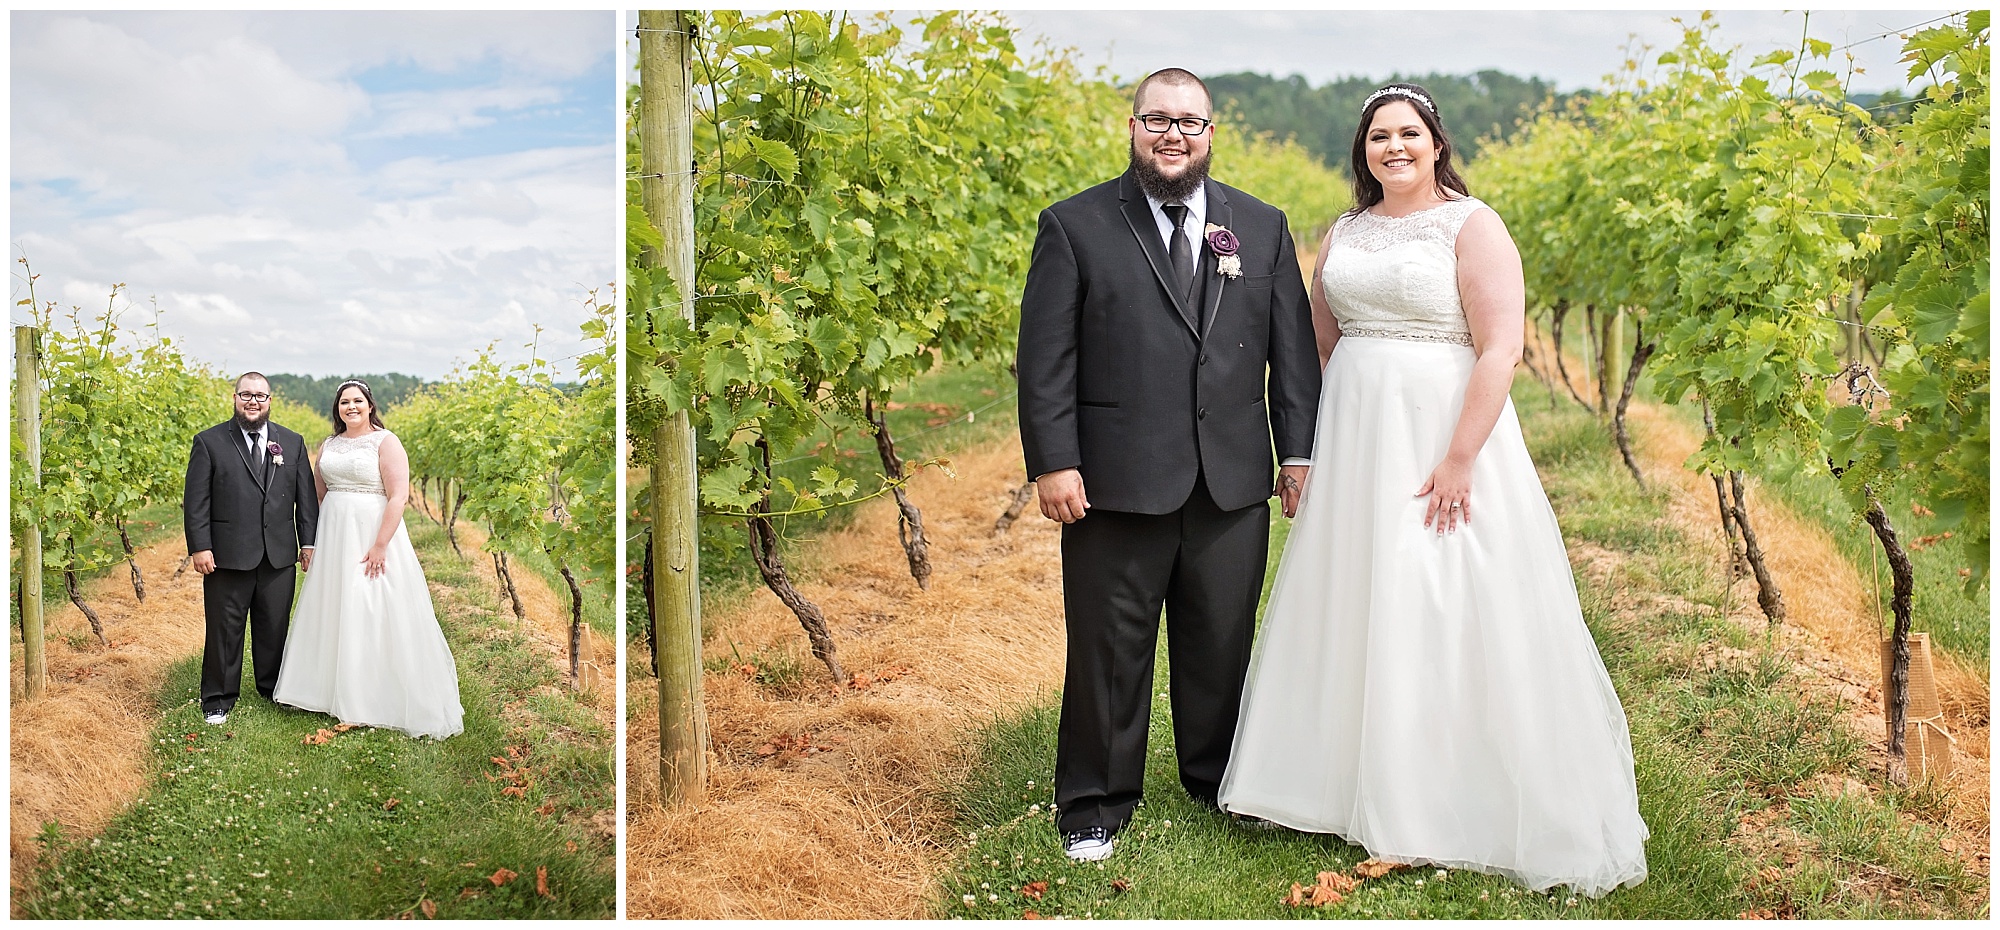 Naylor's Winery Wedding